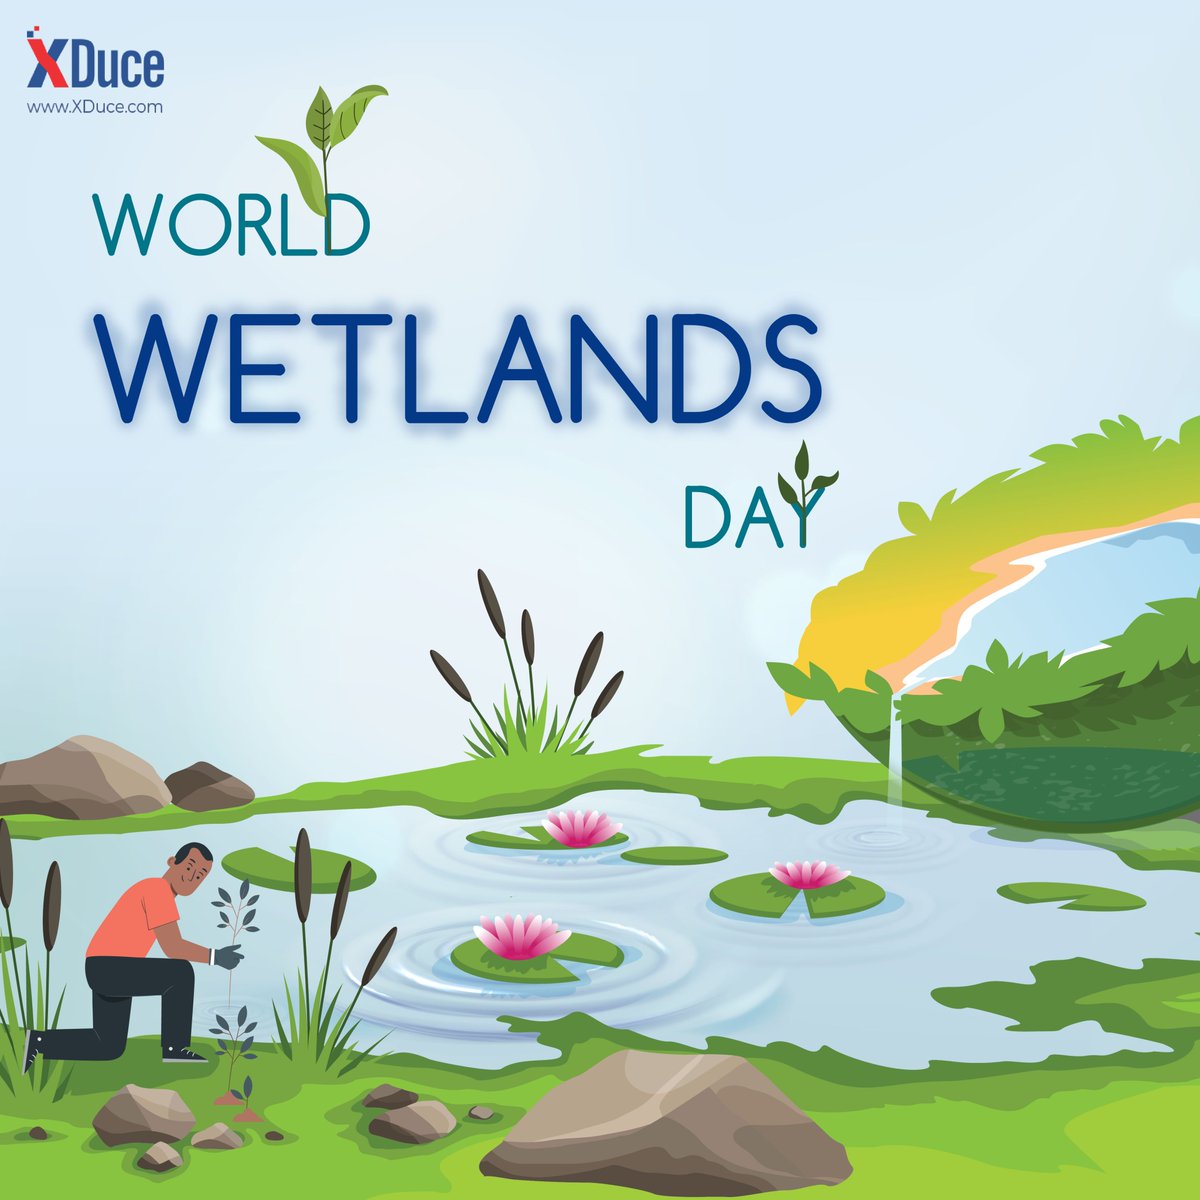 Healthy wetlands are imperative for a healthy Earth.

#xduce #worldwetlandsday #preservenature #preservewetlands #nurturethenature